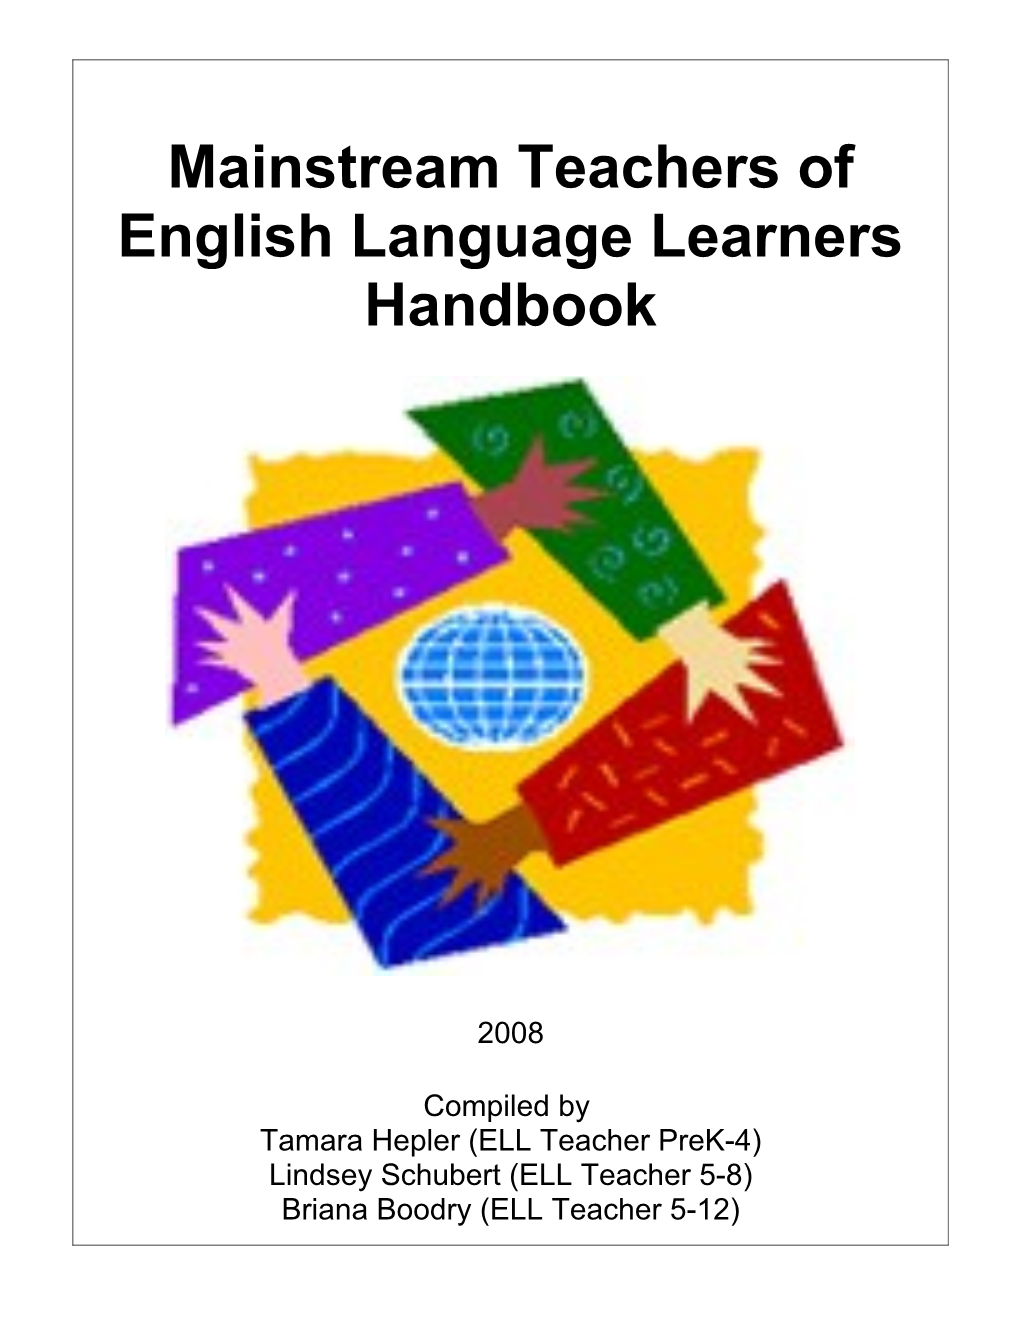 Mainstream Teachers of English Language Learners